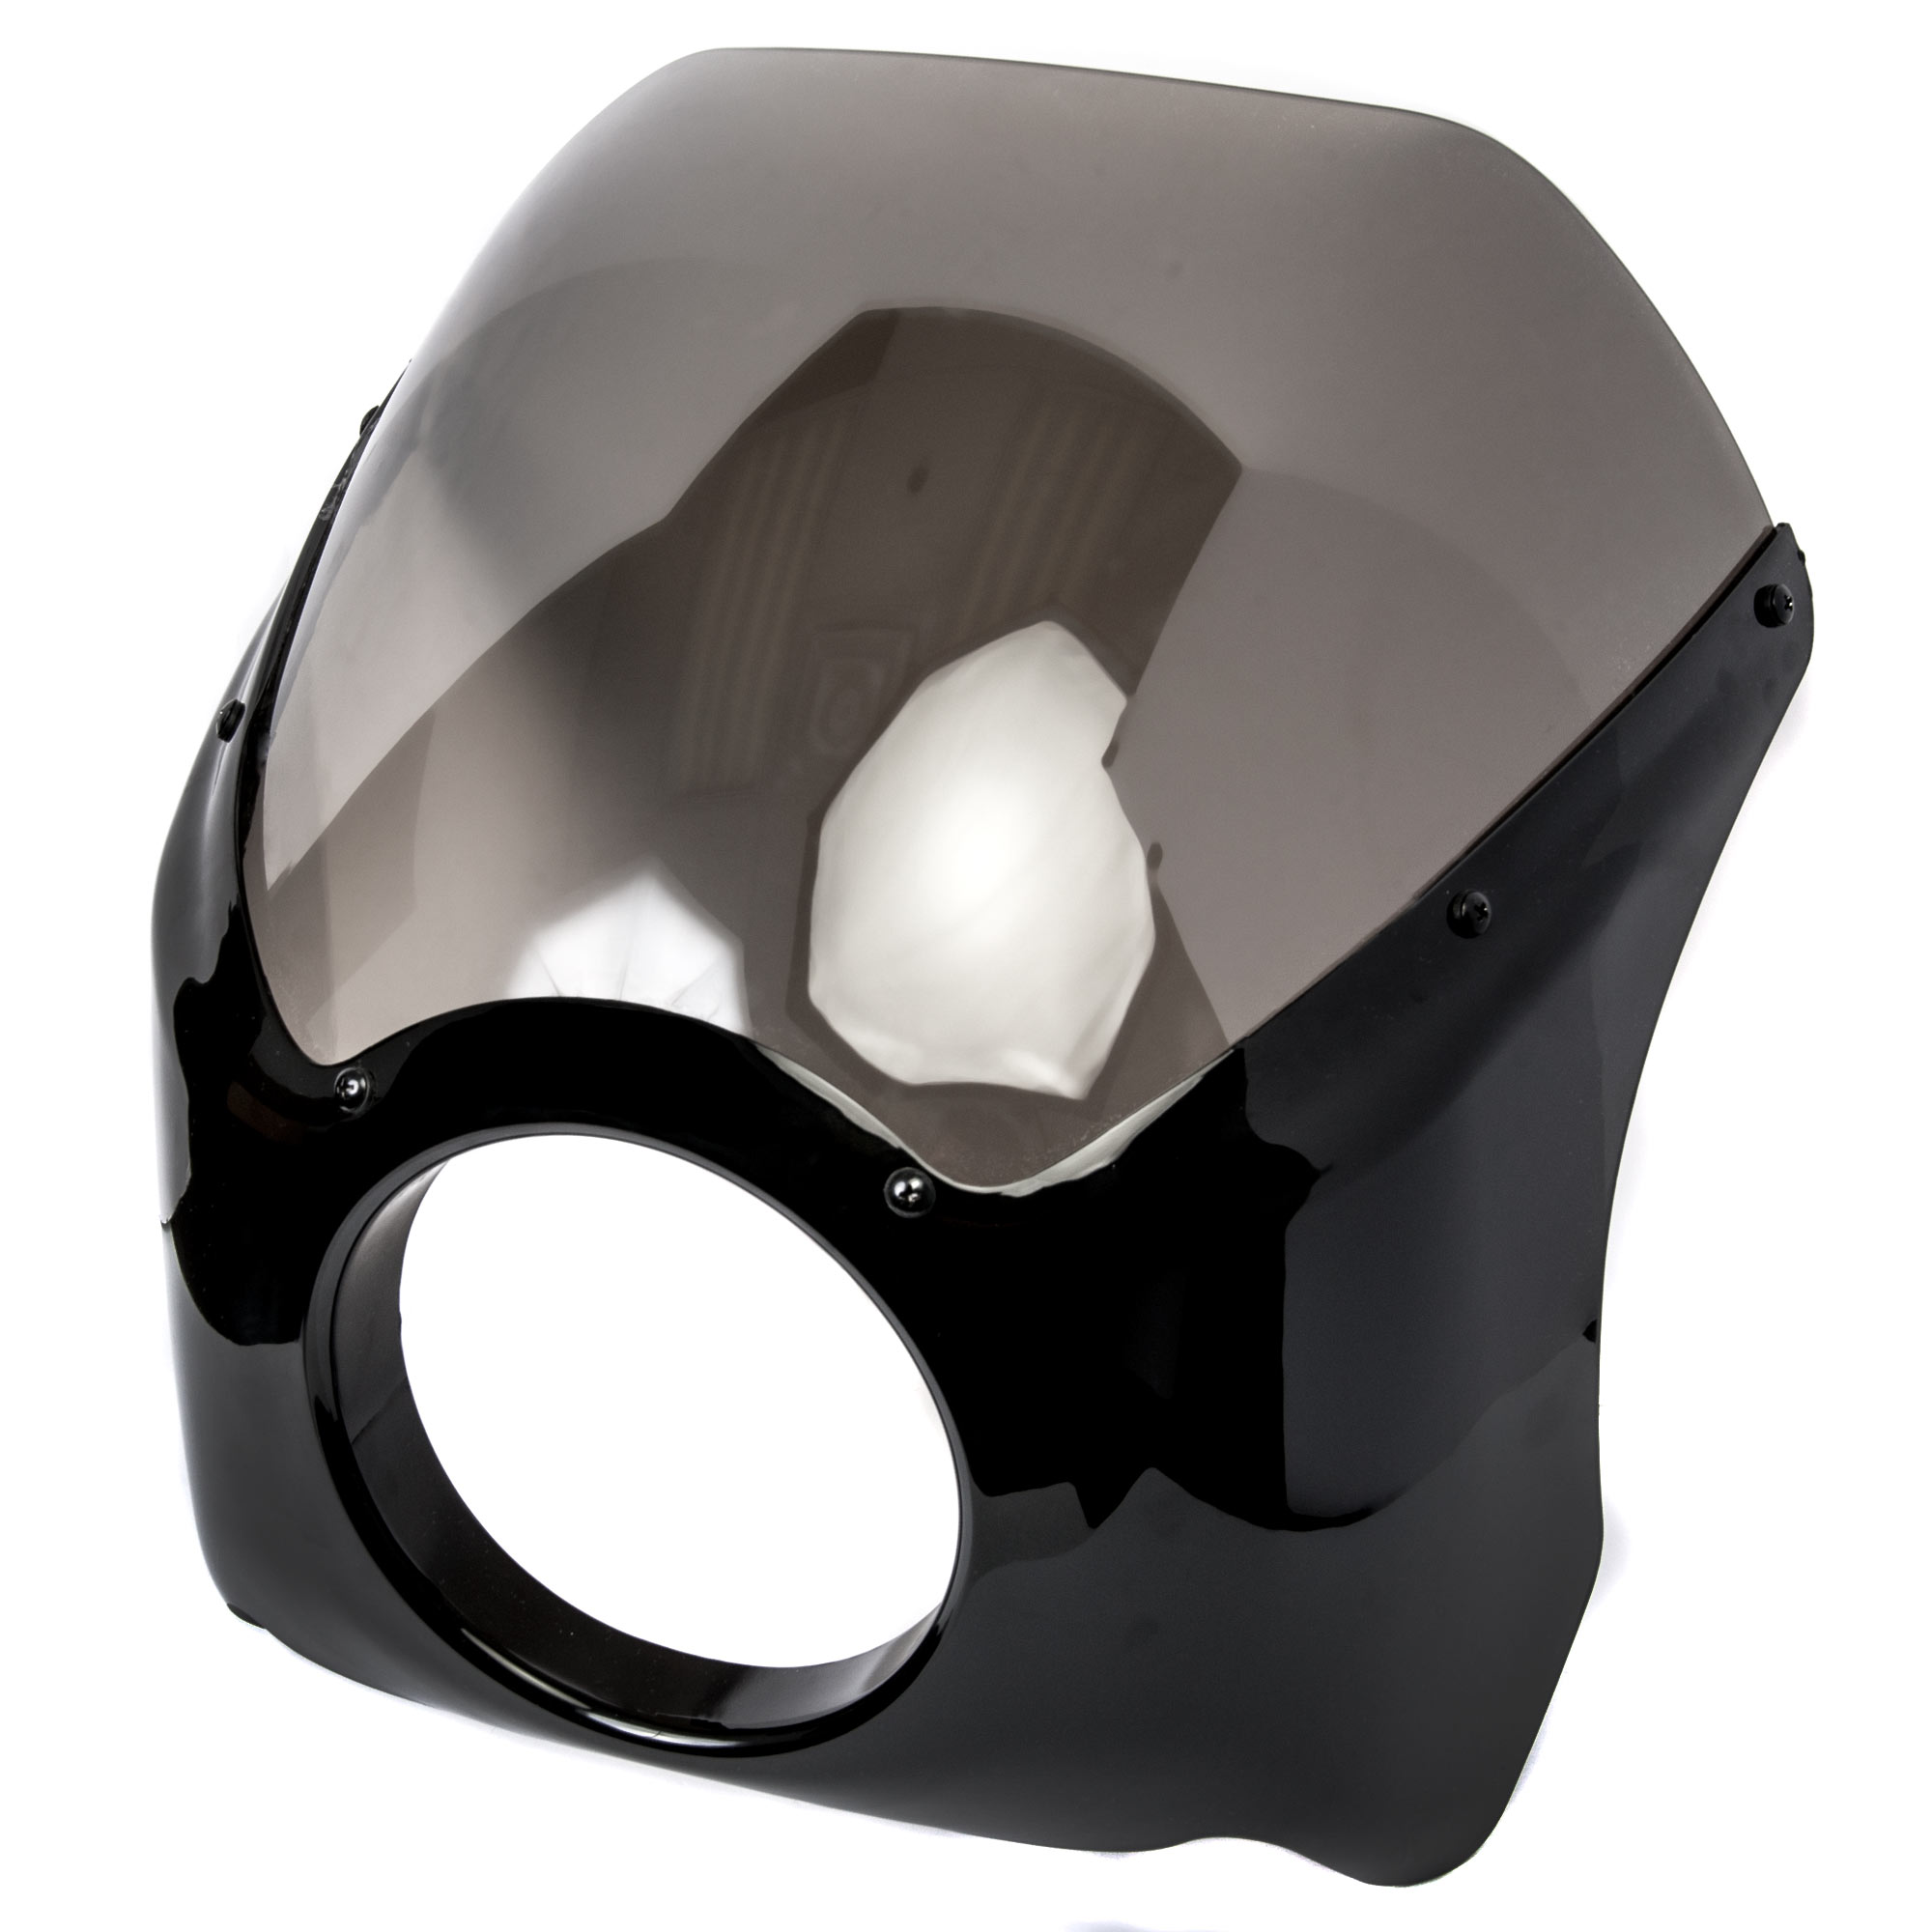 Krator Black & Smoke Headlight Fairing Windshield Kit Compatible with Suzuki Boulevard C109R C50 C90